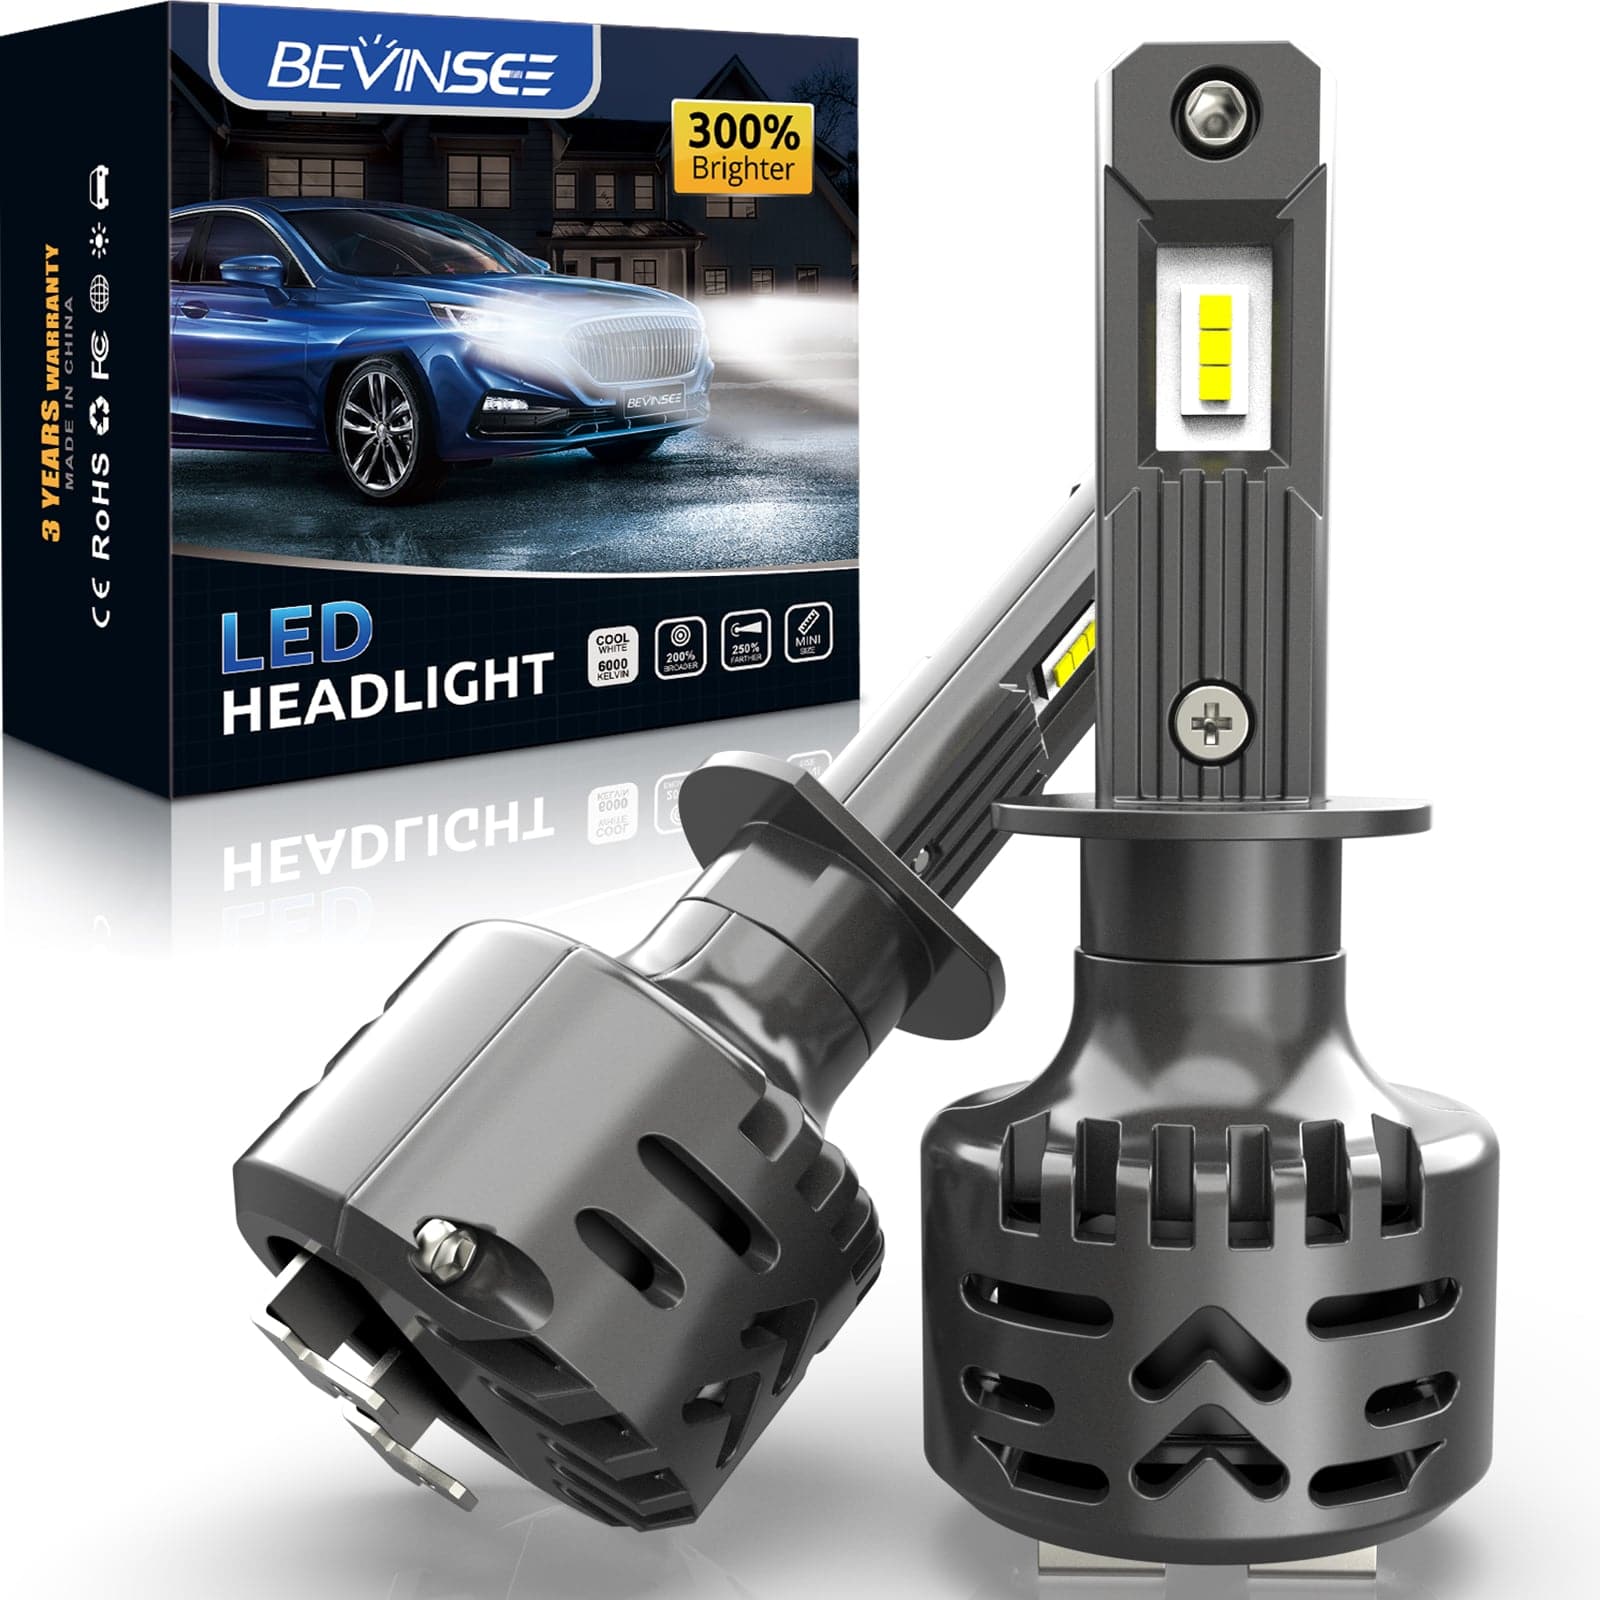 2 Pieces H7 Led Car Headlight Super Bright High Power 100w Wireless with  Fan Fog Lamps Canbus For BMW Audi Skoda Hyundai VW